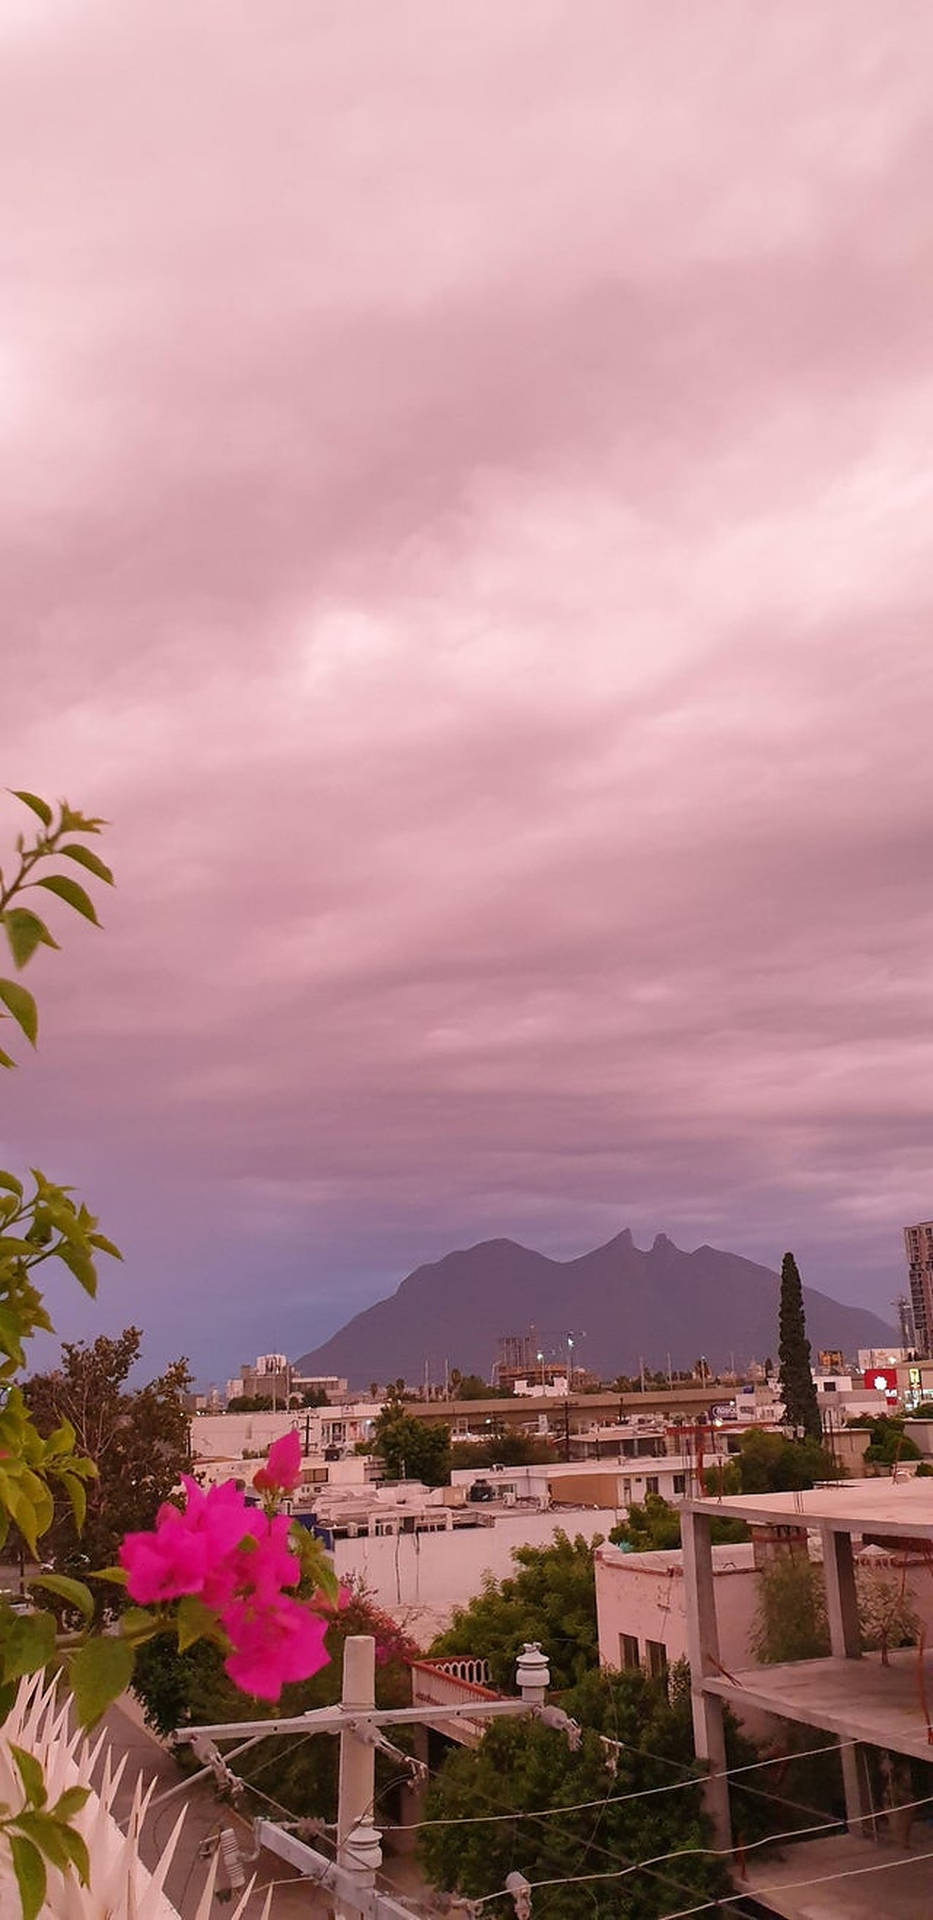 Aesthetic Shot Of Monterrey